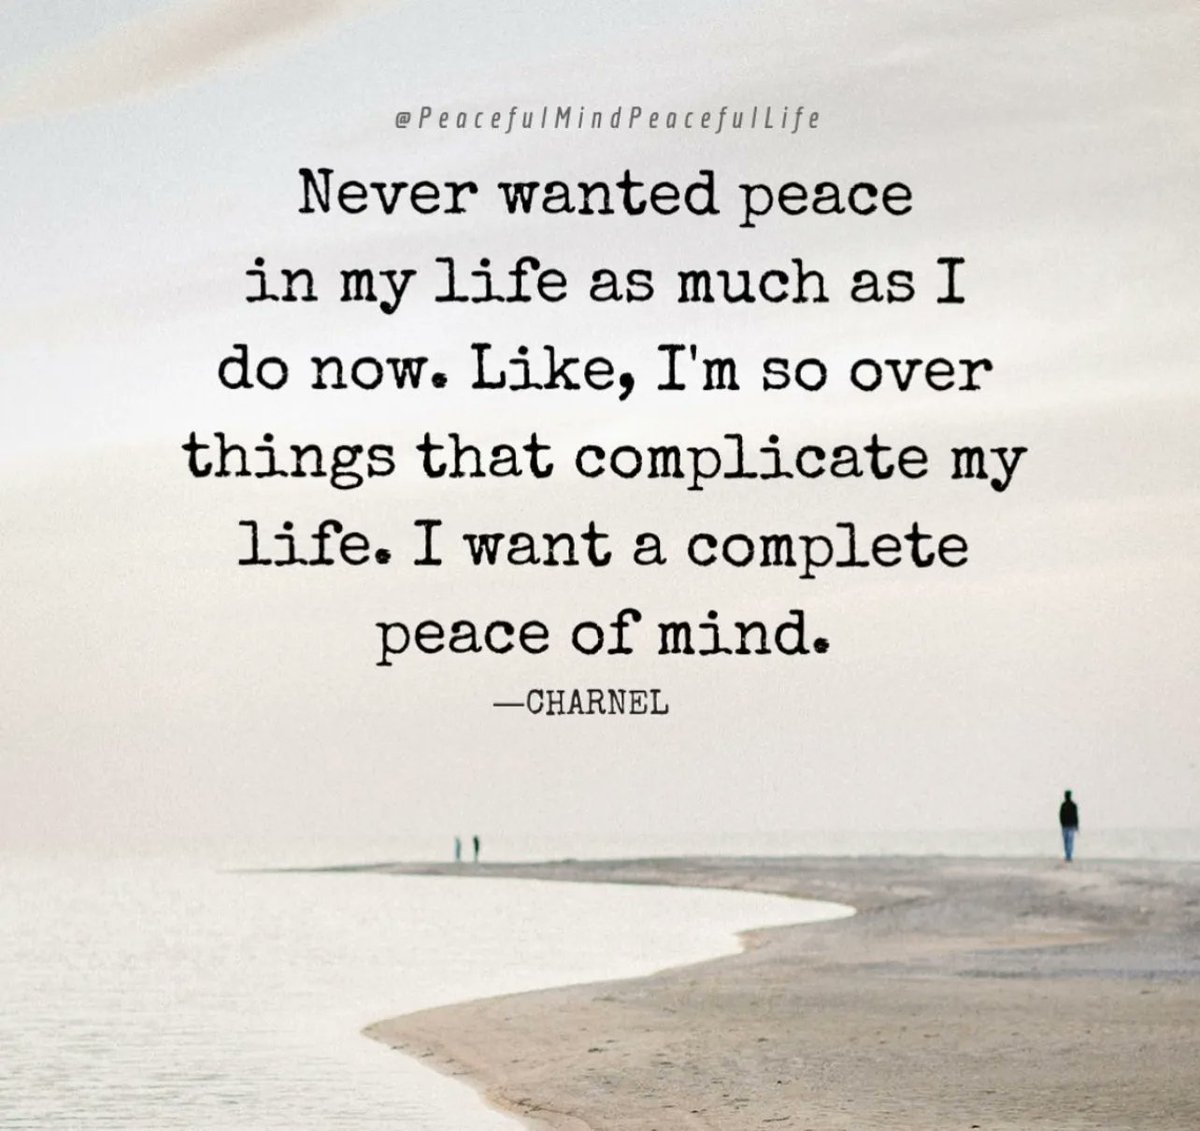 Peace. #peacefulmindpeacefullife #charnel #wednesdaythought